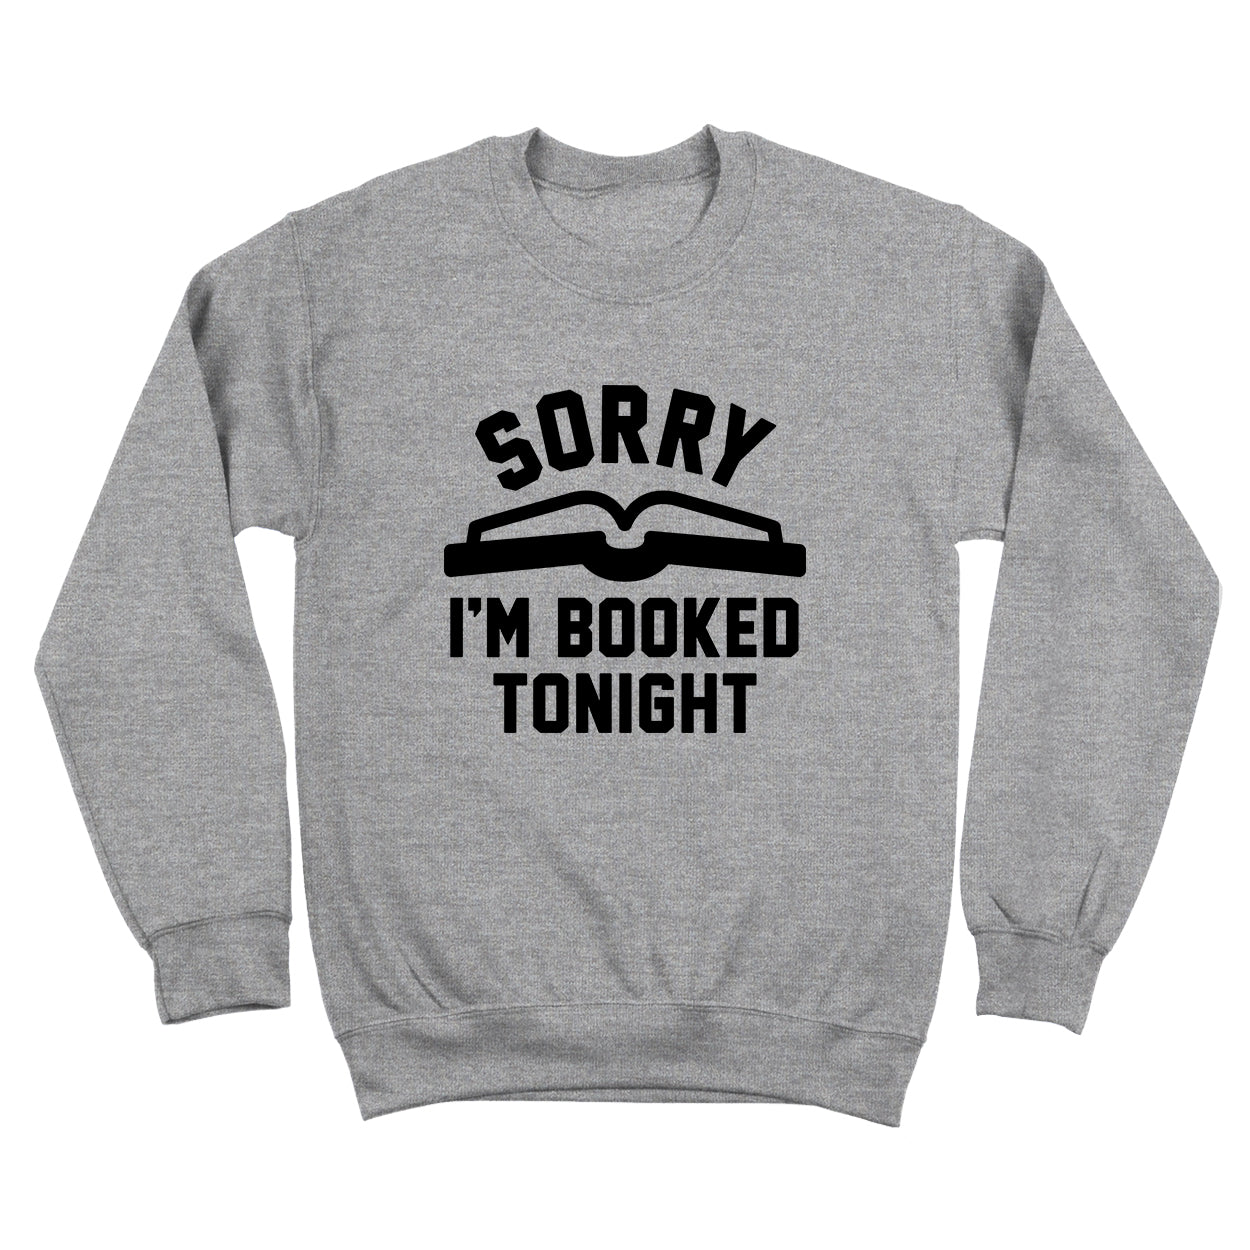 Sorry I'm booked tonight - DonkeyTees